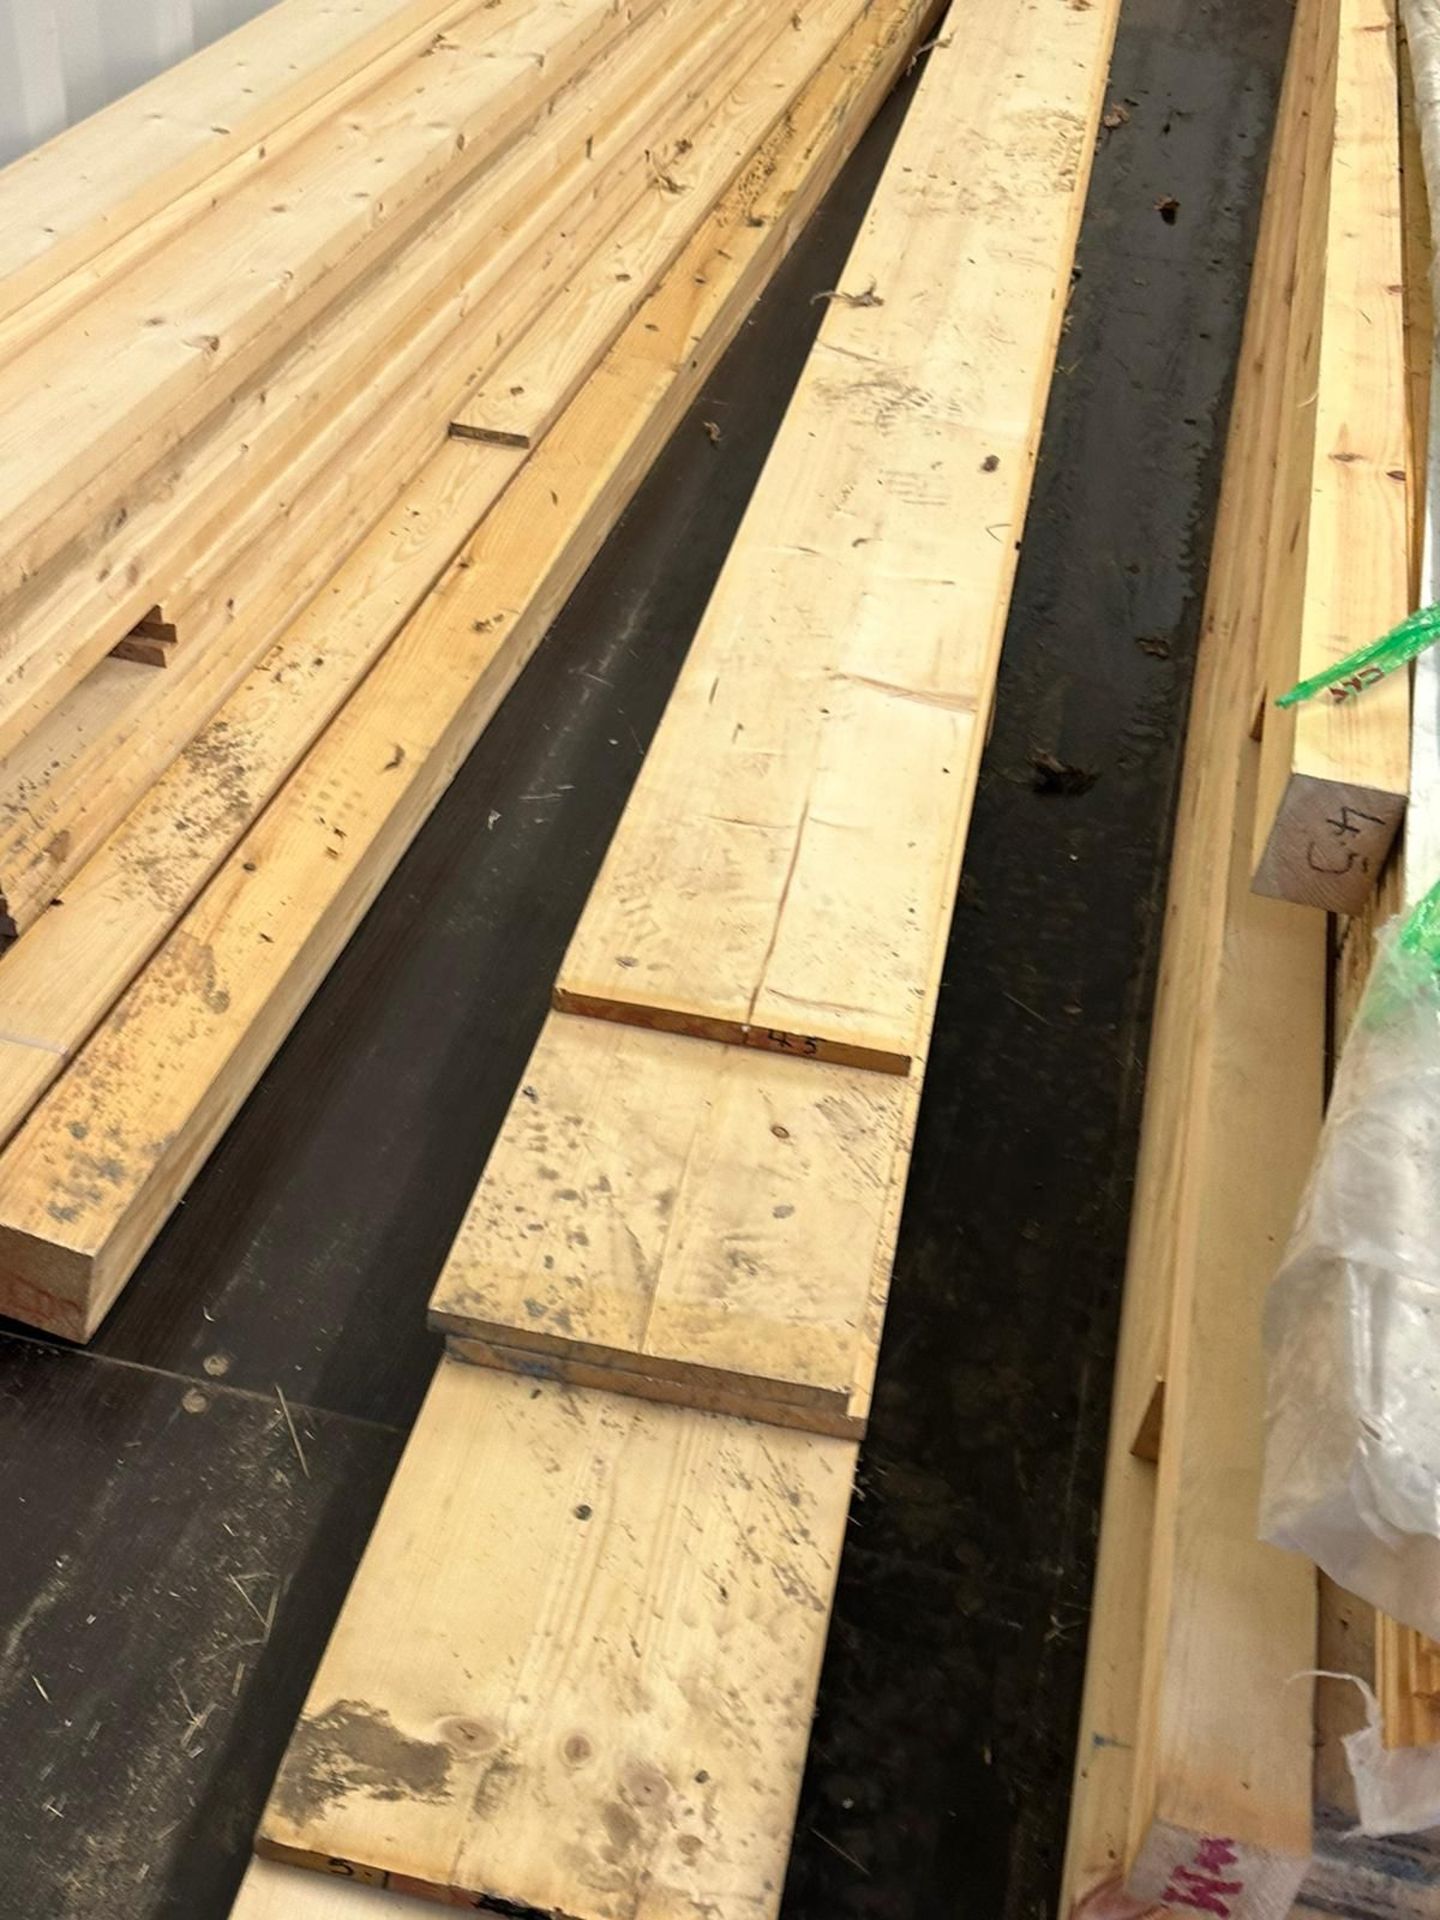 Timber prepared timber all dry stored timber - Bild 3 aus 10